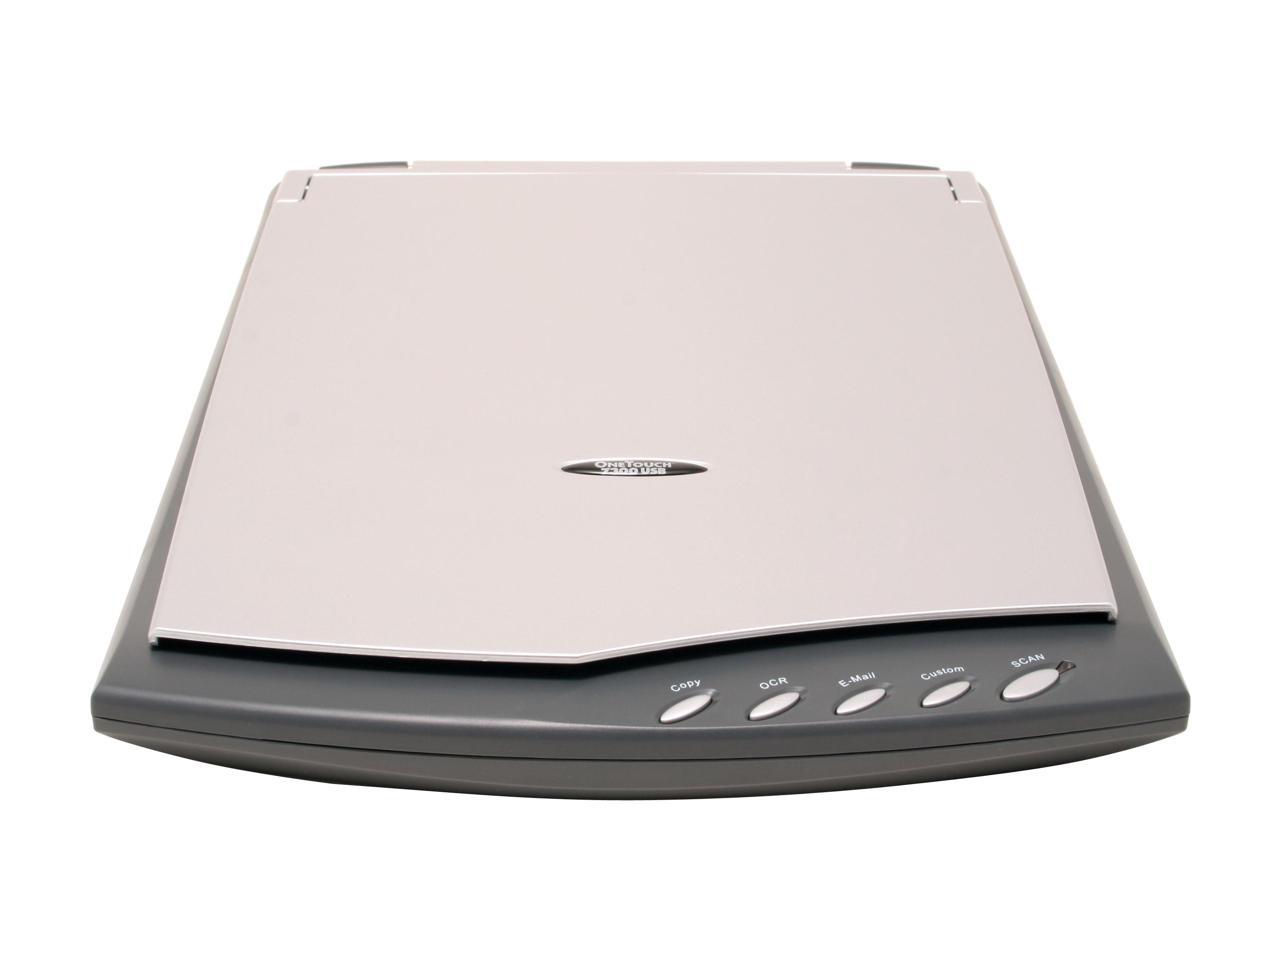 Visioneer OneTouch 7300 USB Ultra-Slimline Flatbed Scanner 